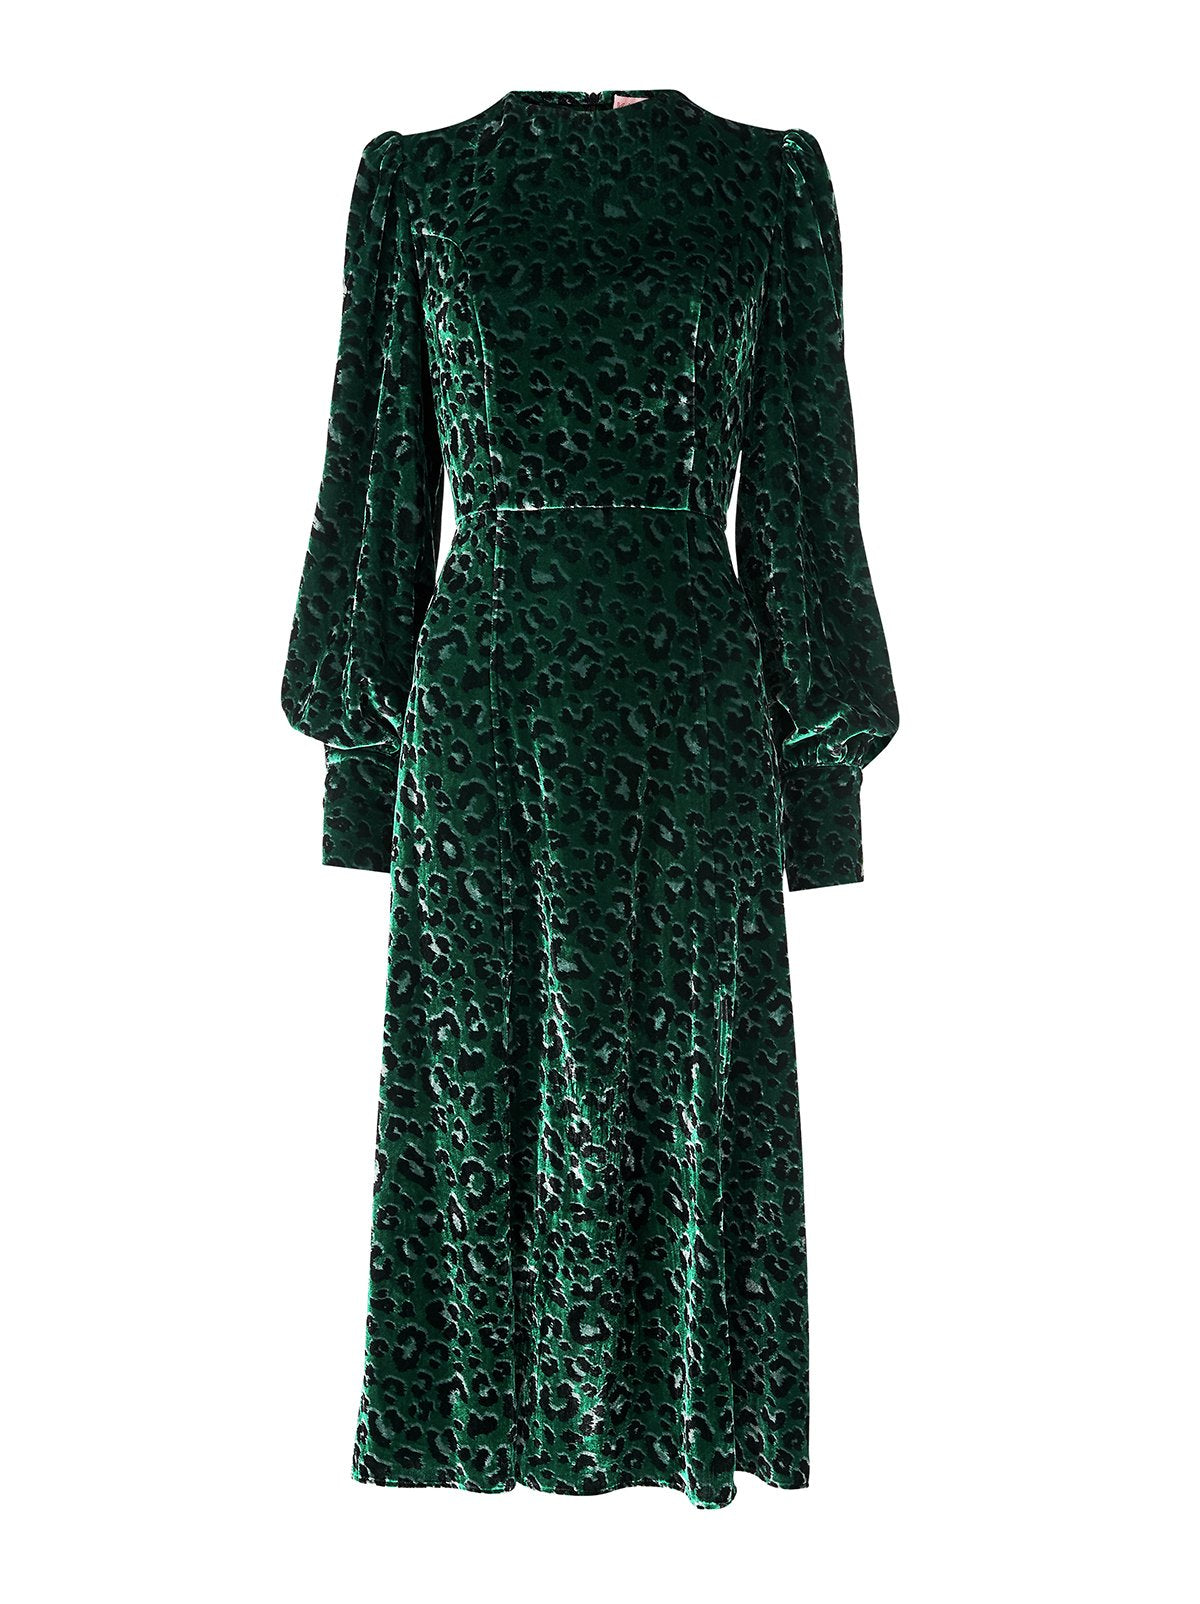 long green leopard print dress